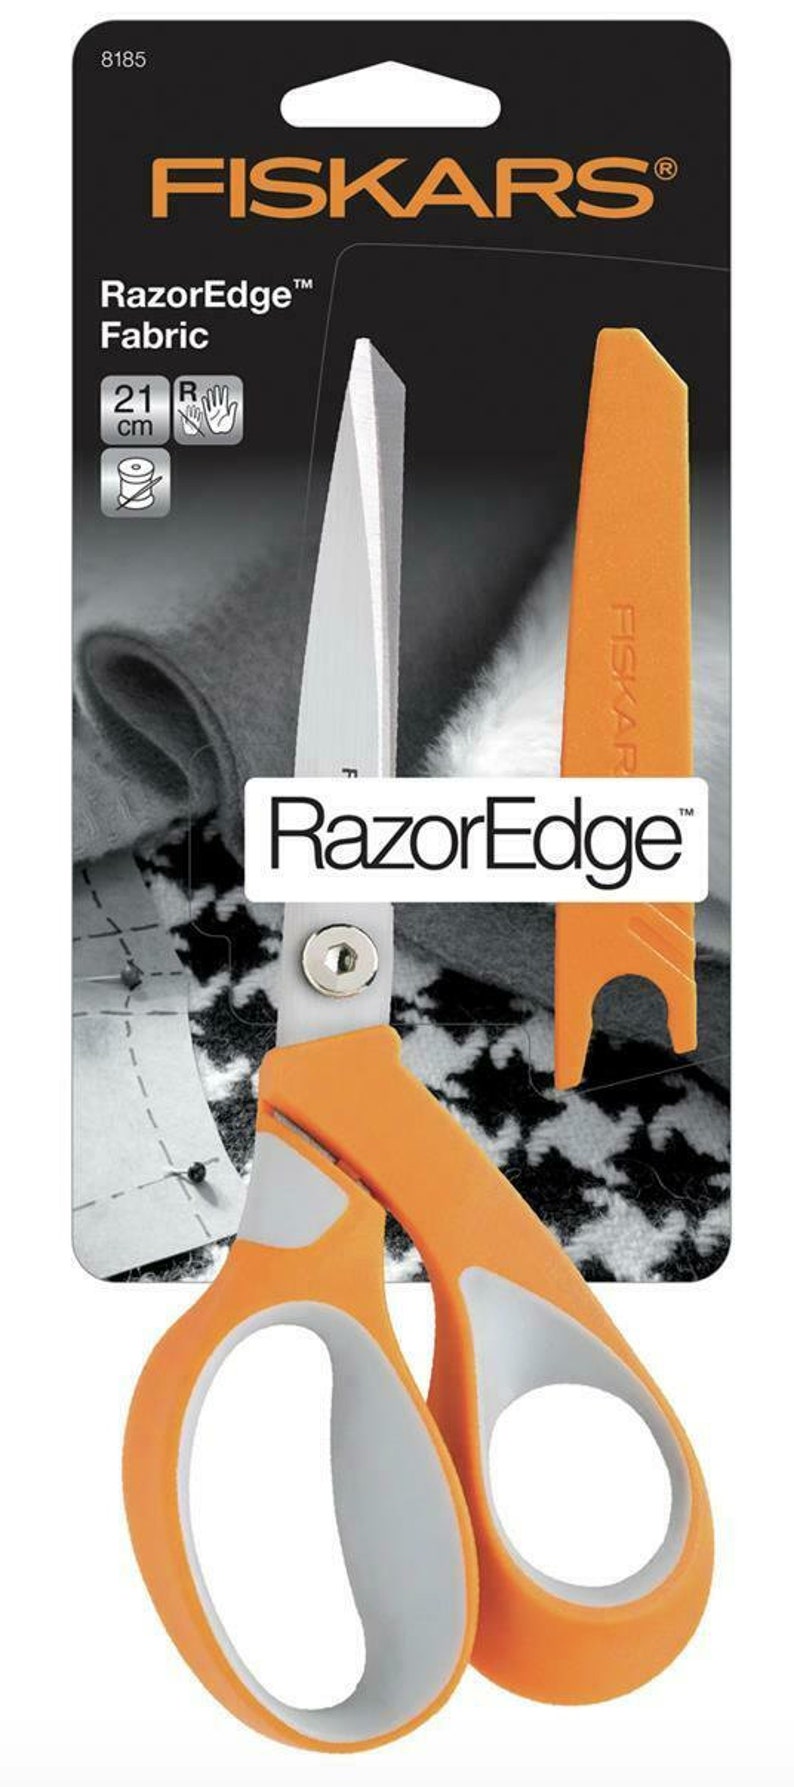 FISKARS Premium Fabric RazorEdge Dressmaking Scissors Soft Choice of 3 Sizes image 3